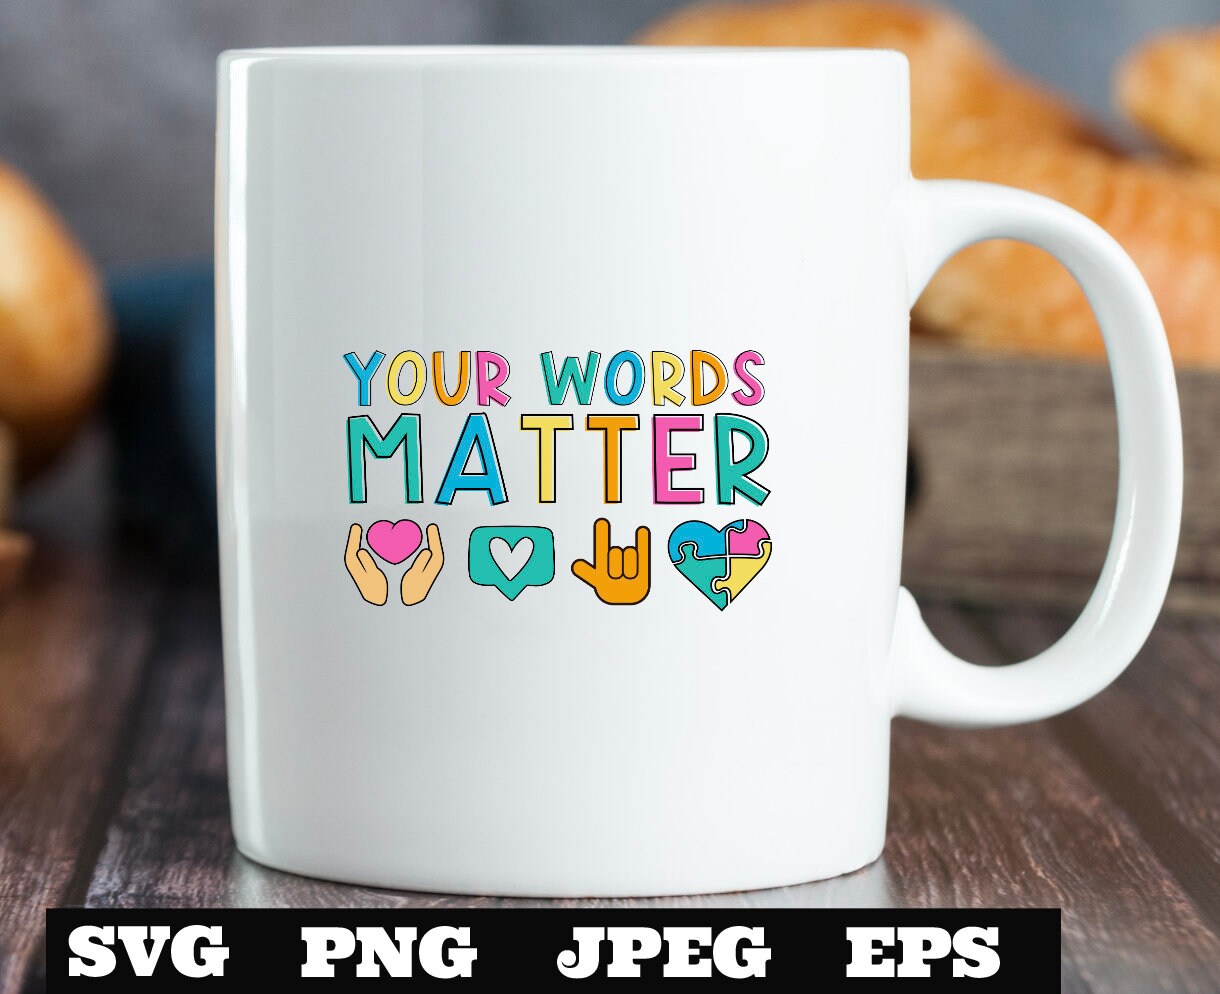 Your Words Matter SVG png eps jpeg AAC SPED Teacher Inclusion, Neurodiversity, Teachers, Language Special Education, Words Matter, Speech